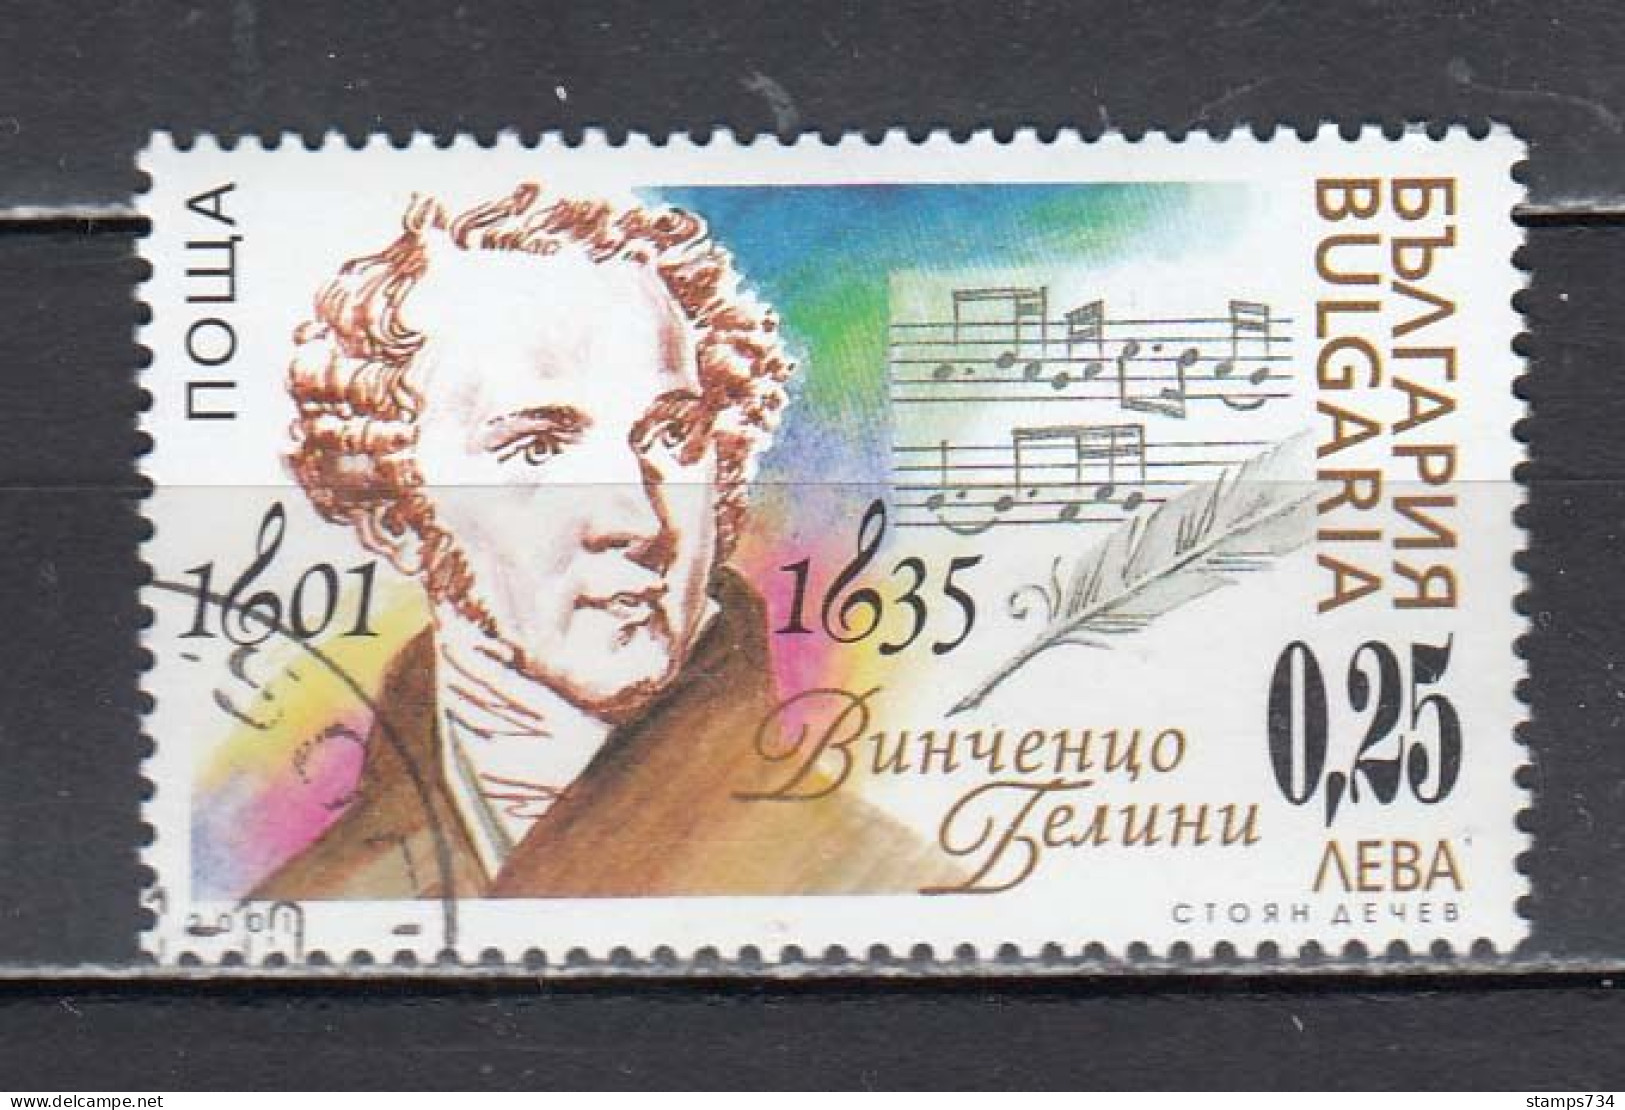 Bulgaria 2001 - 200th Birthday Of Vincenzo Bellini, Italian Composer, Mi-Nr. 4538, Used - Gebraucht